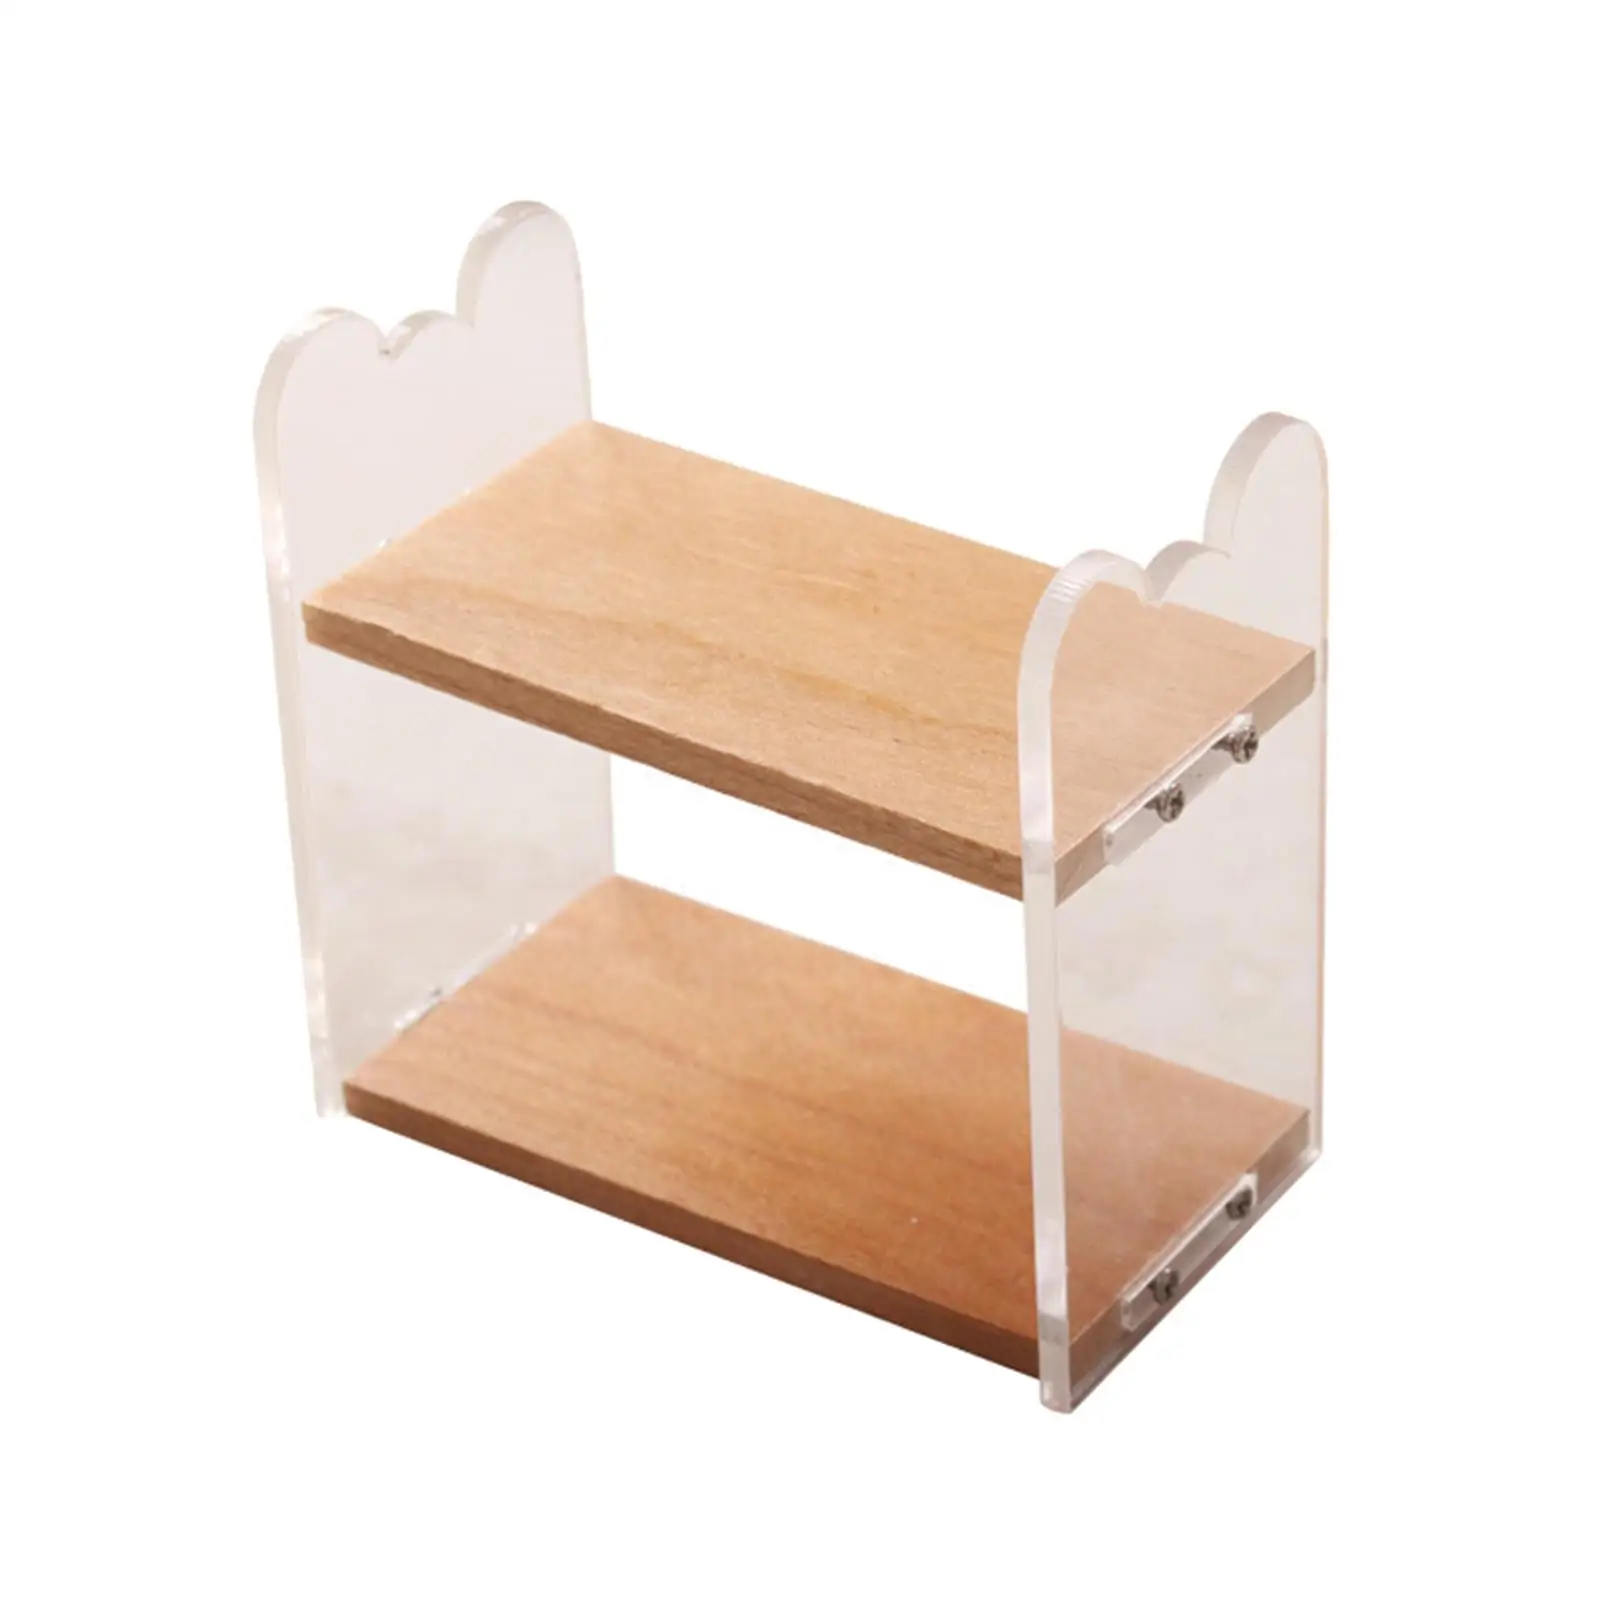 1:12 Dollhouse Miniature Simple Acrylic Wood Shelf 2 Layer Display Rack Create Scenes Accessory Furniture Decor Pretend Toys